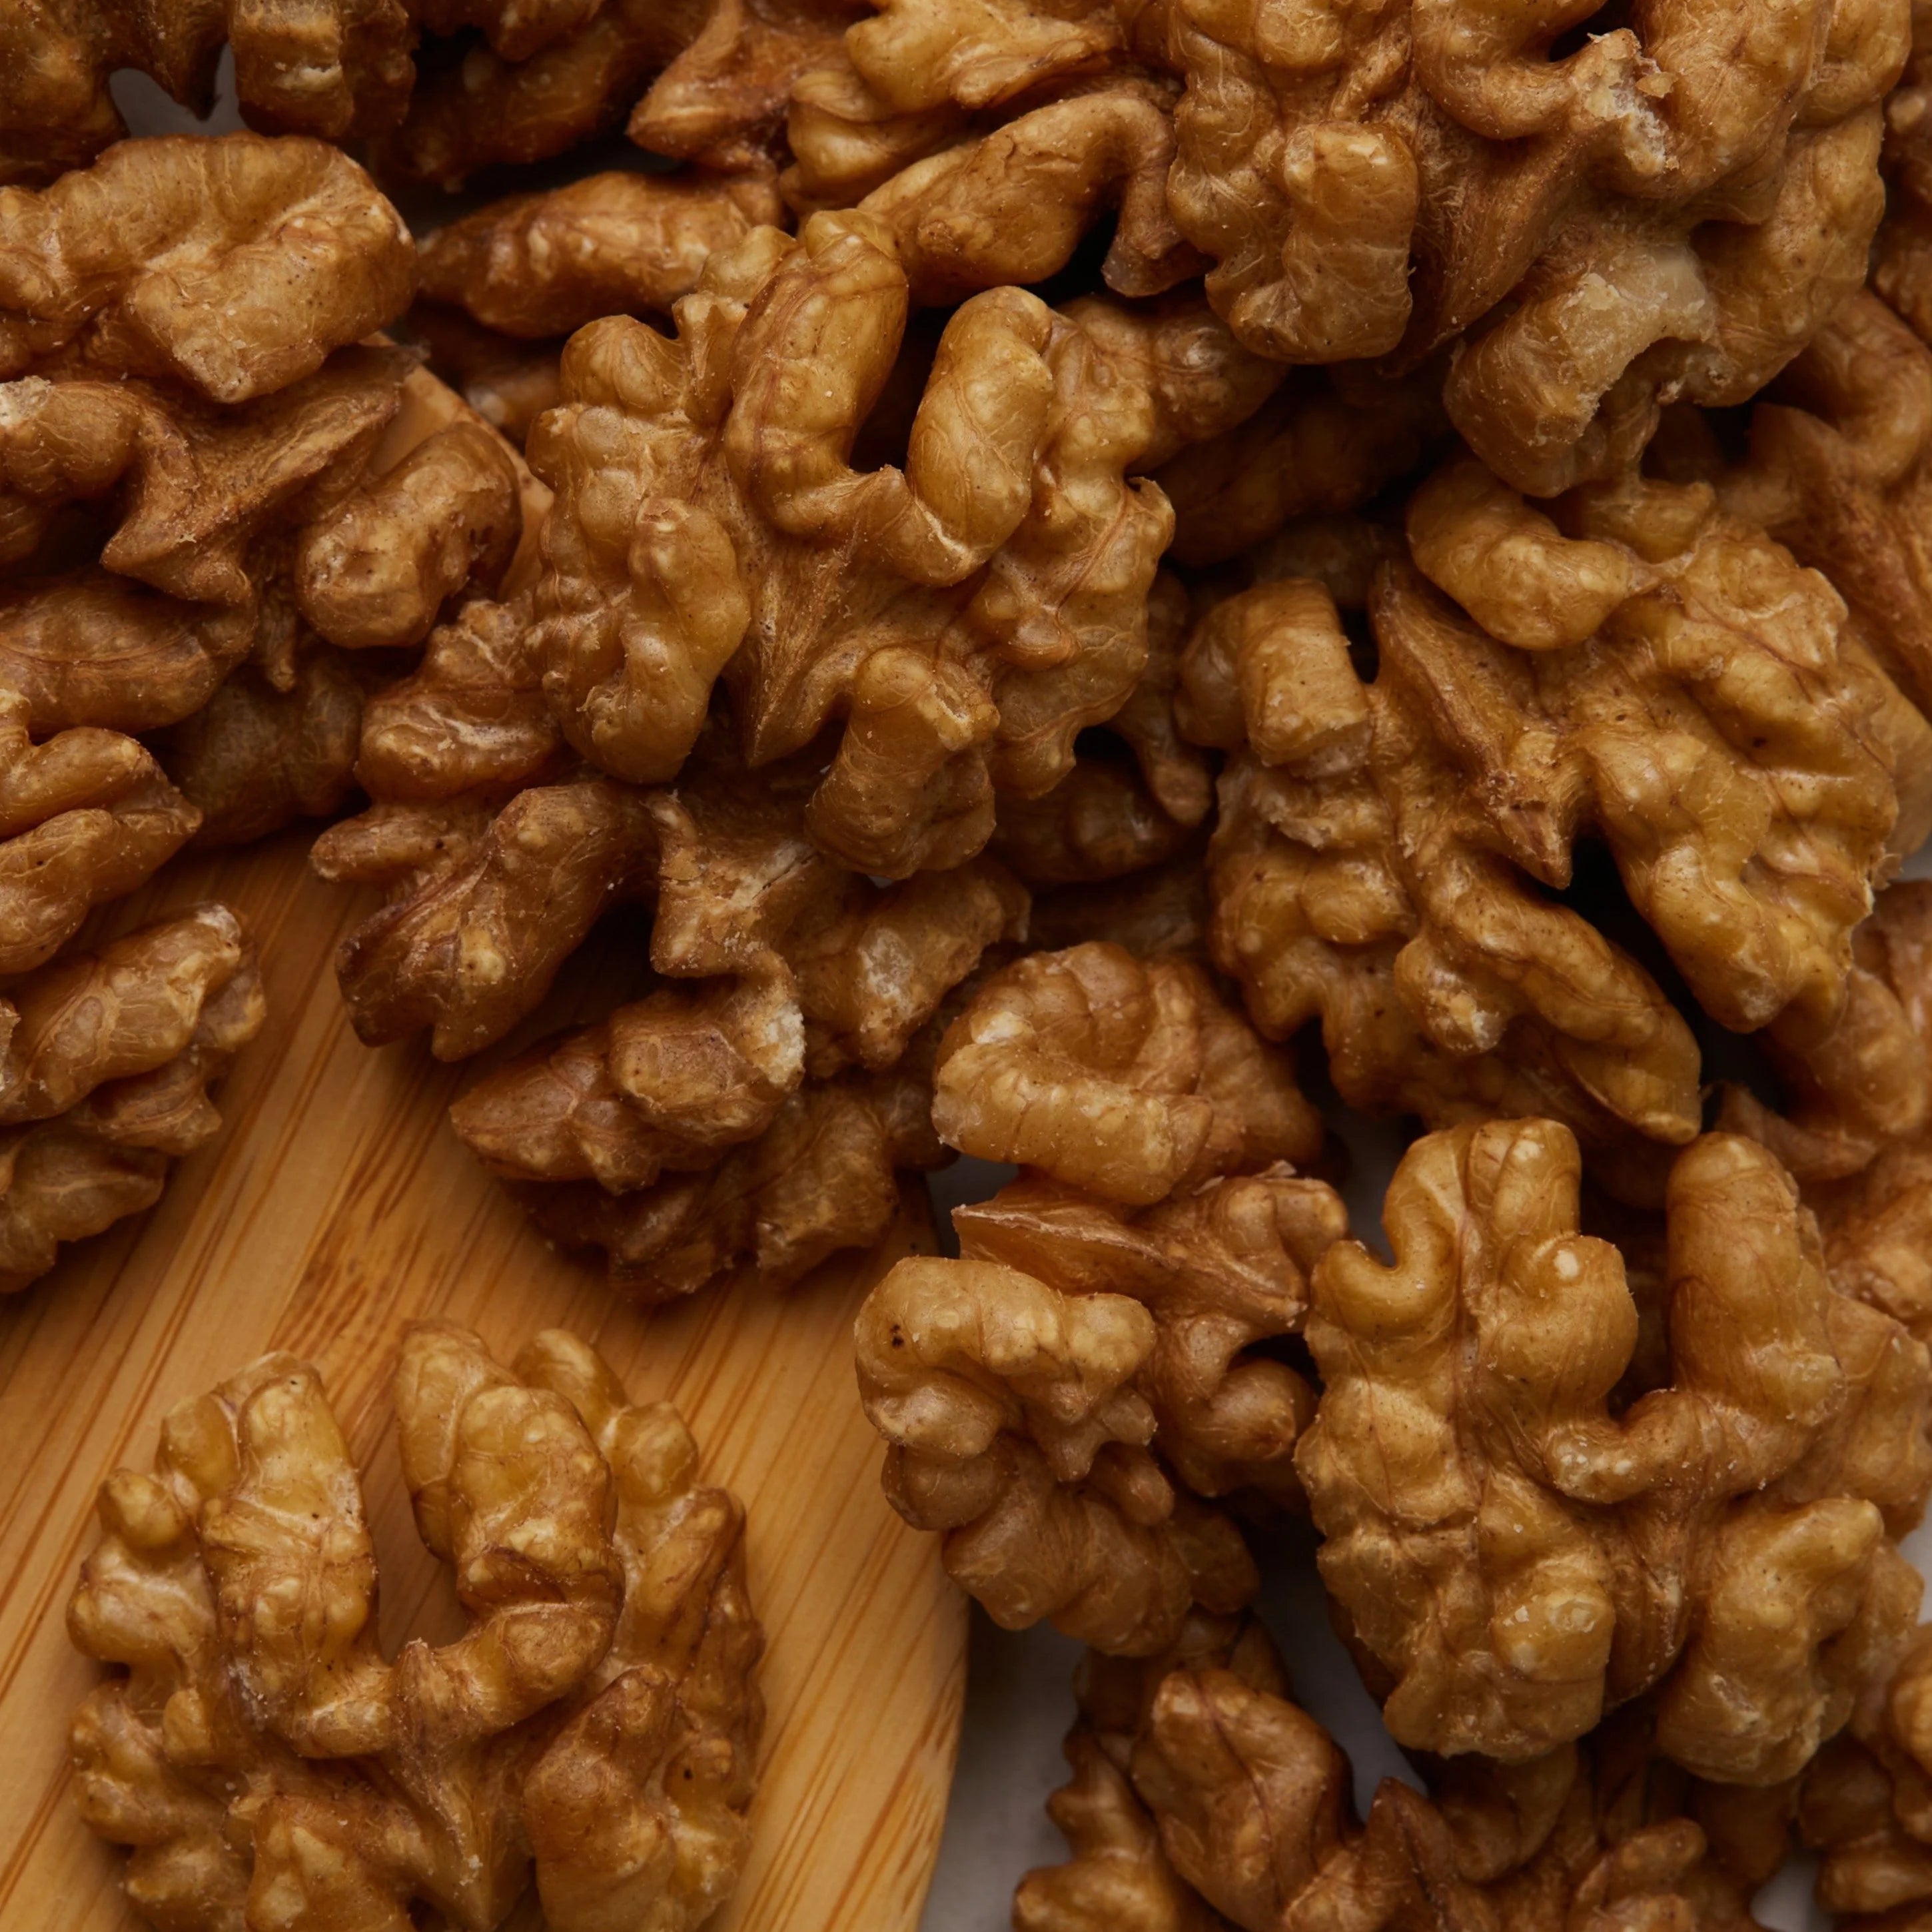 Amazin' Graze Lightly Roasted USA Walnuts Closeup